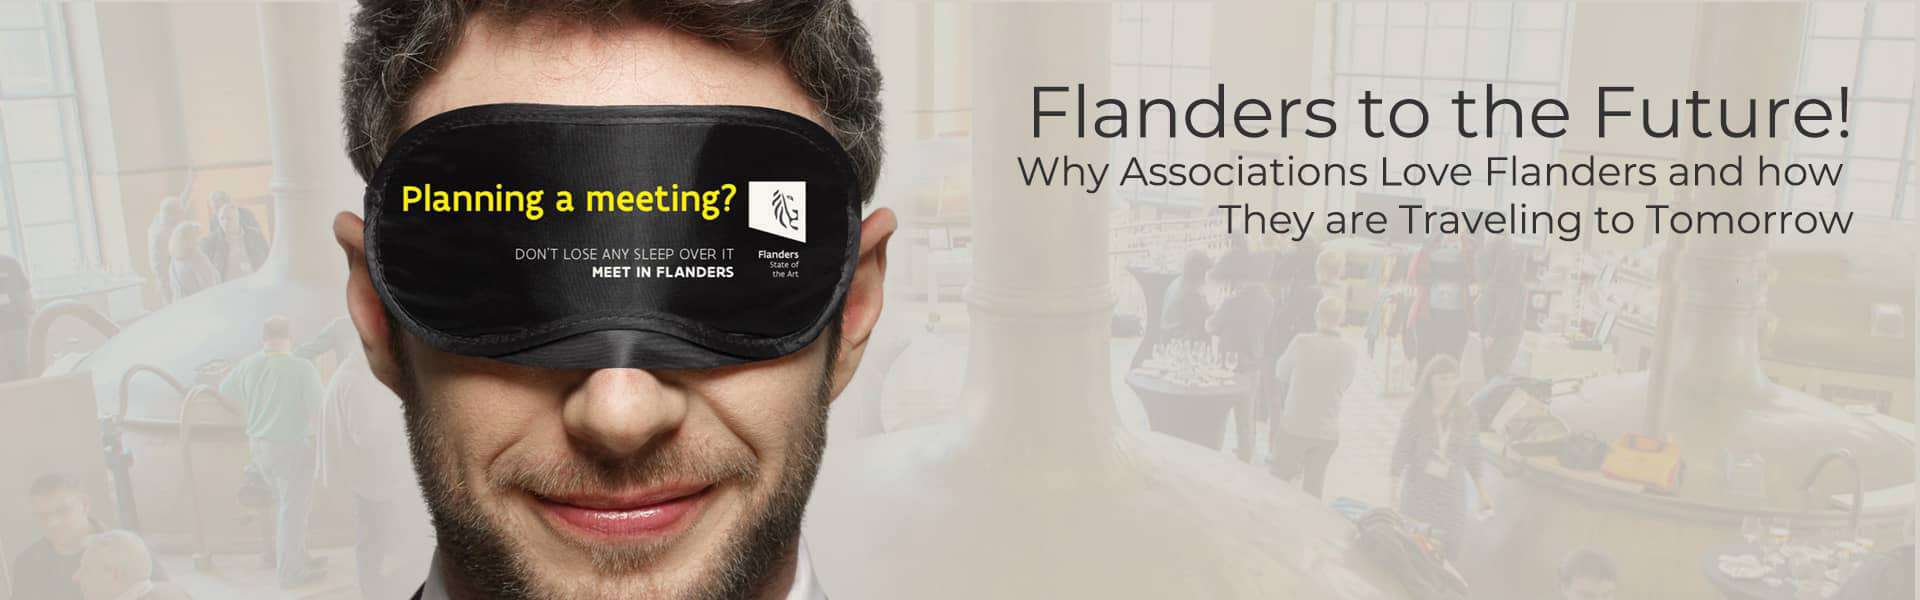 Flanders-to-the-Future-Post-Webinar